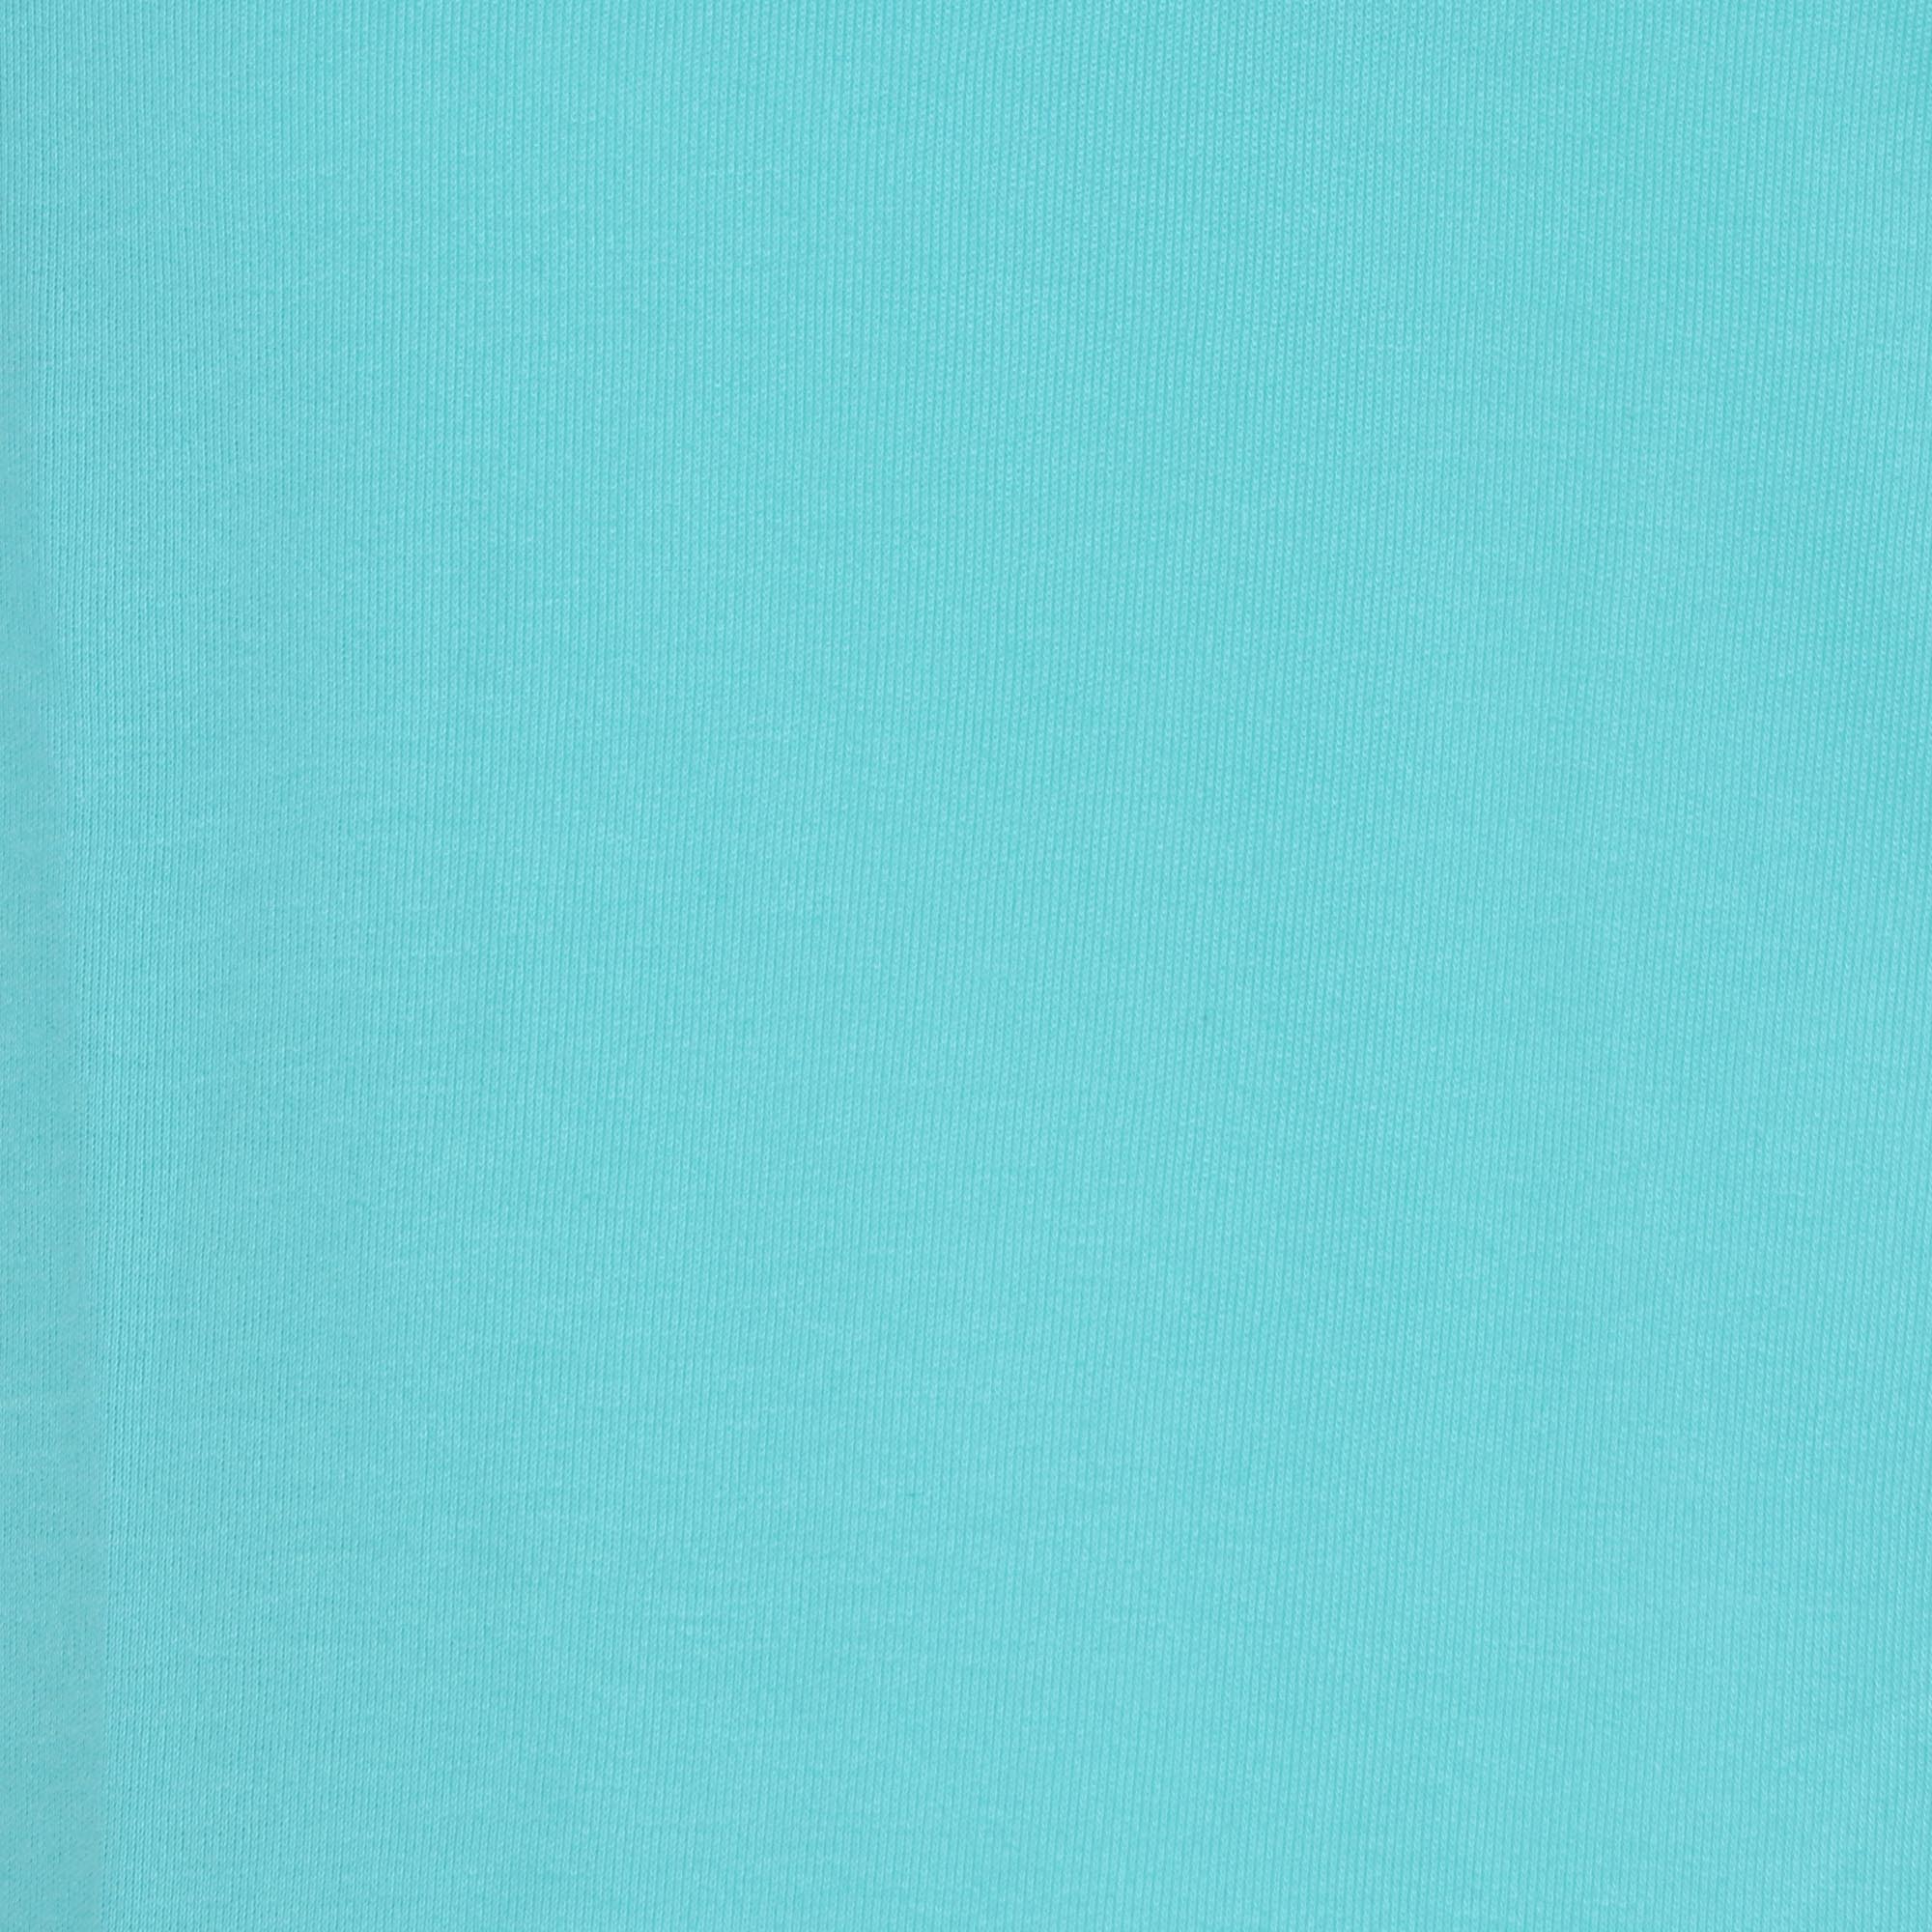 Мужская футболка-поло Diva Teks лазурная (DTD-12), цвет лазурный, размер 46-48 - фото 6